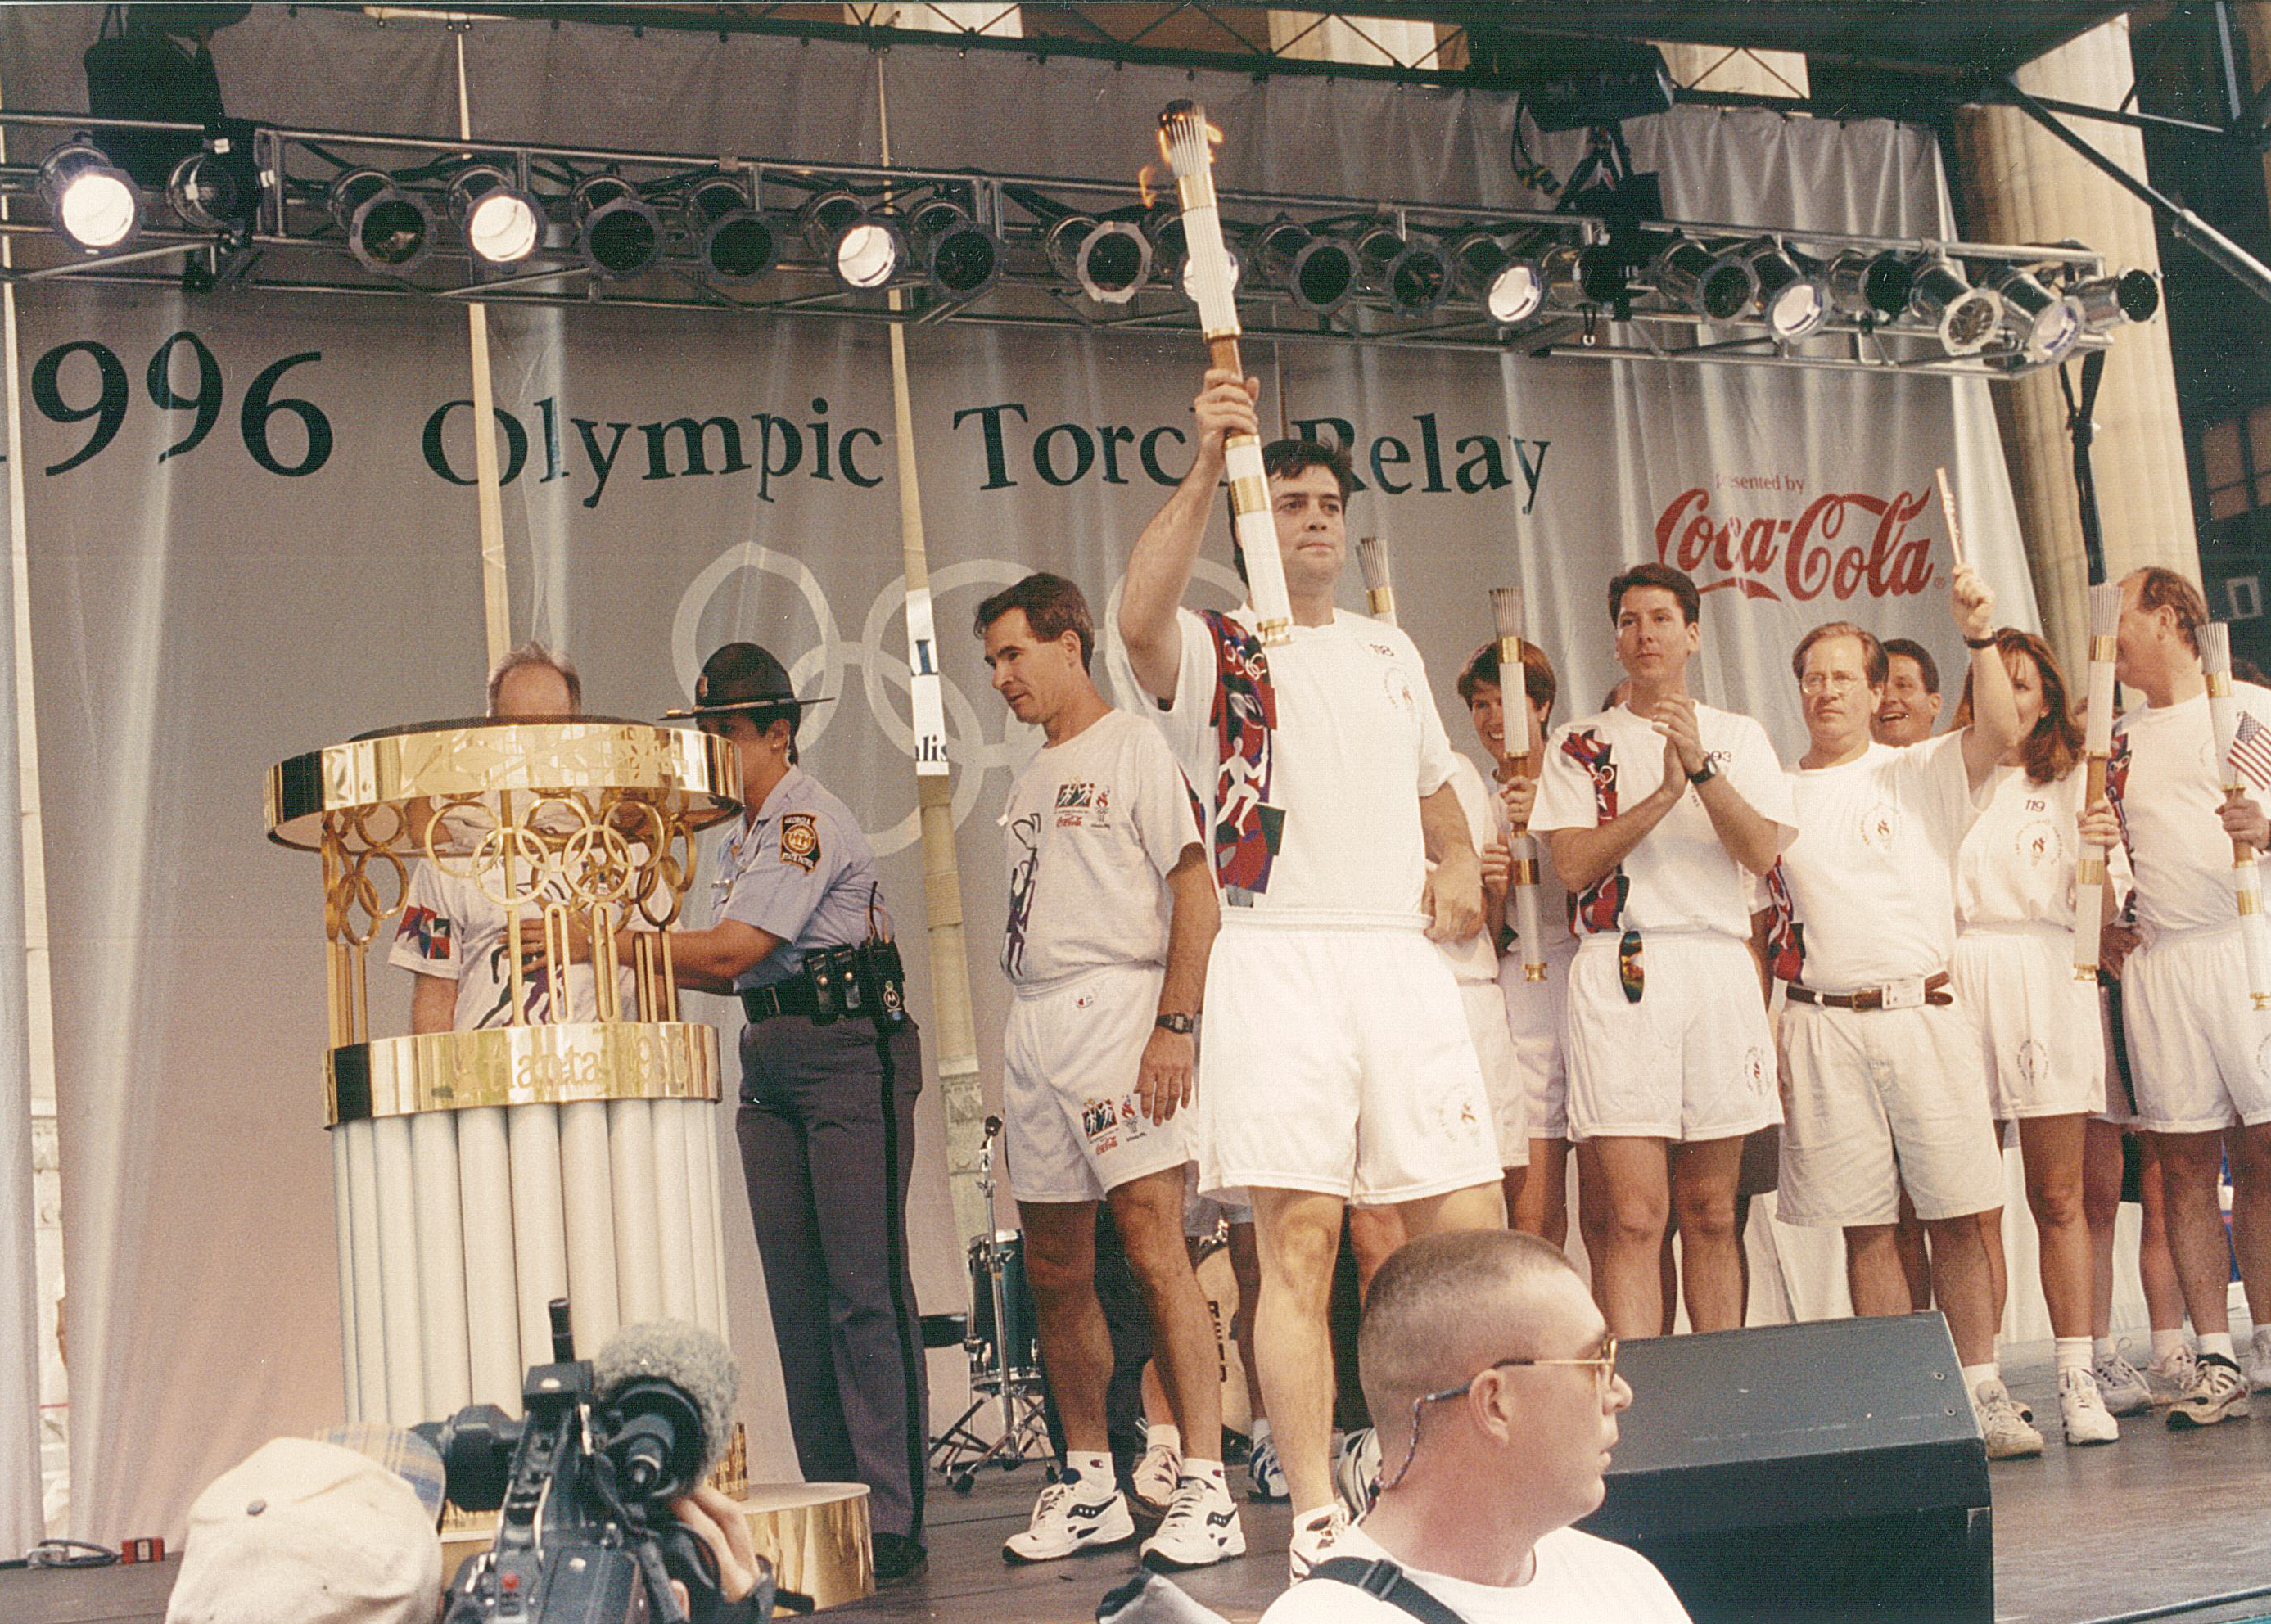 Memory Lane: The 1996 Olympic Torch Run Image